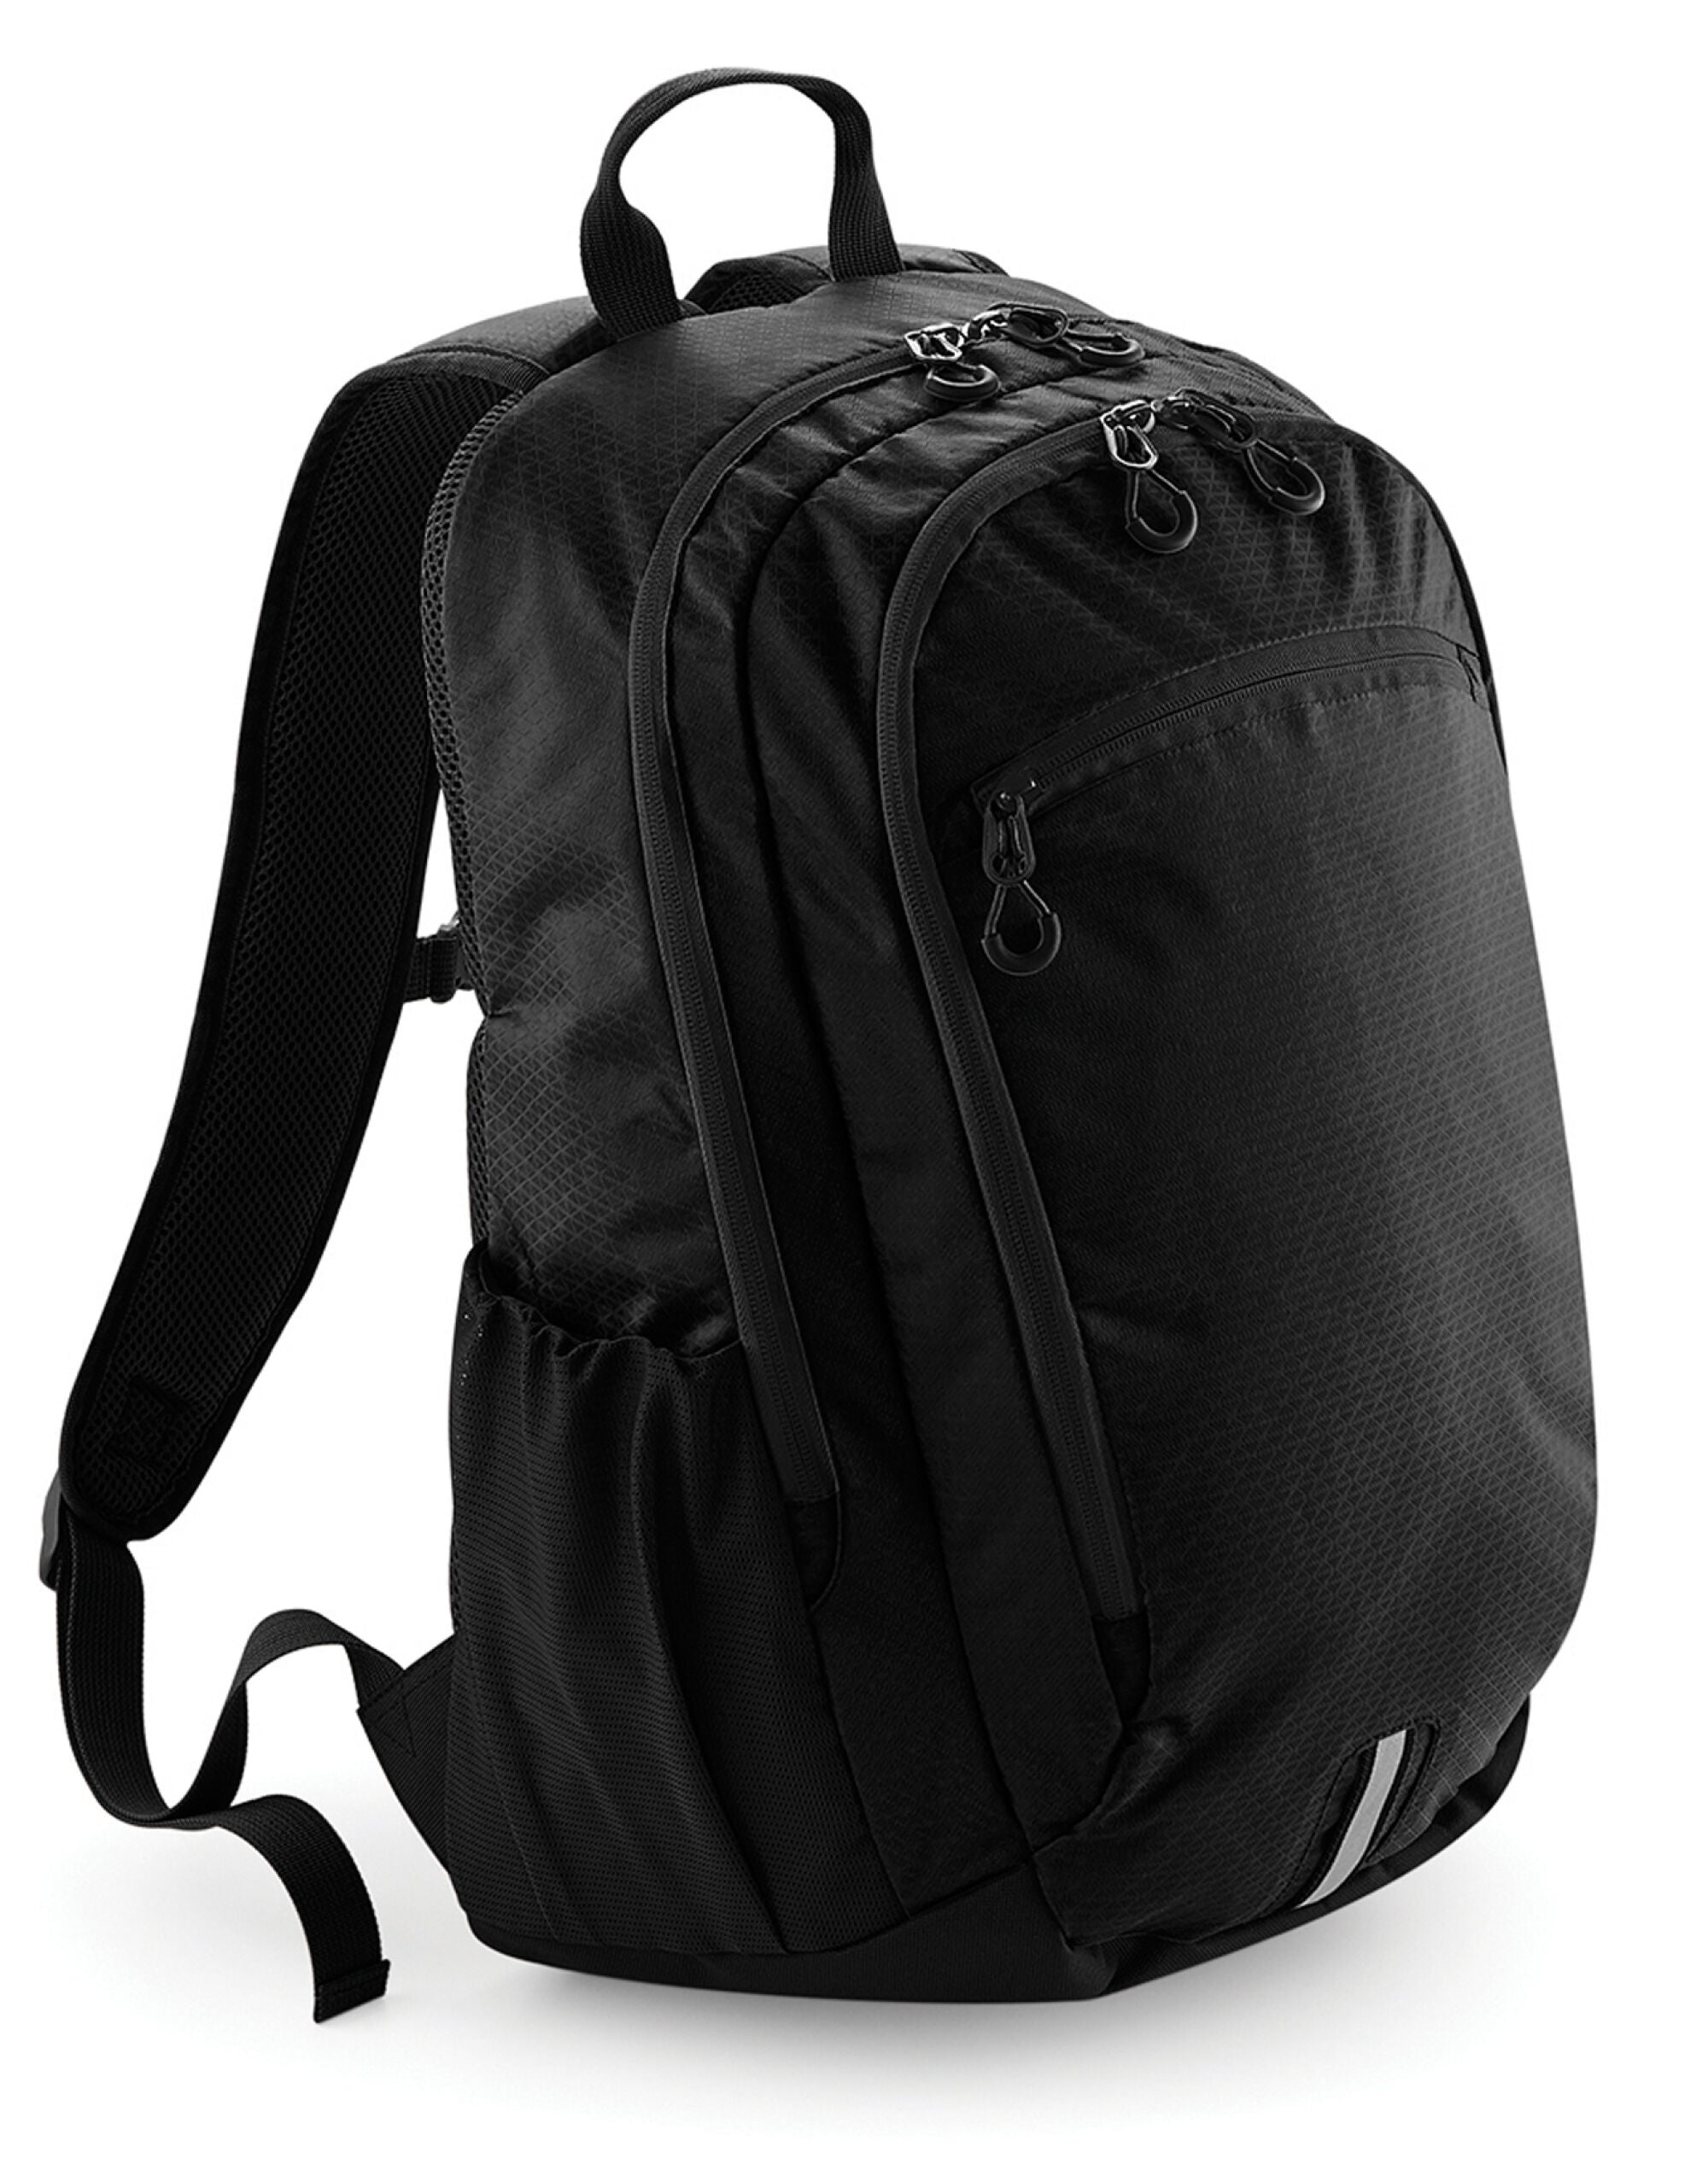 Quadra Endeavour Backpack TearAway label for ease of rebranding (QD550)